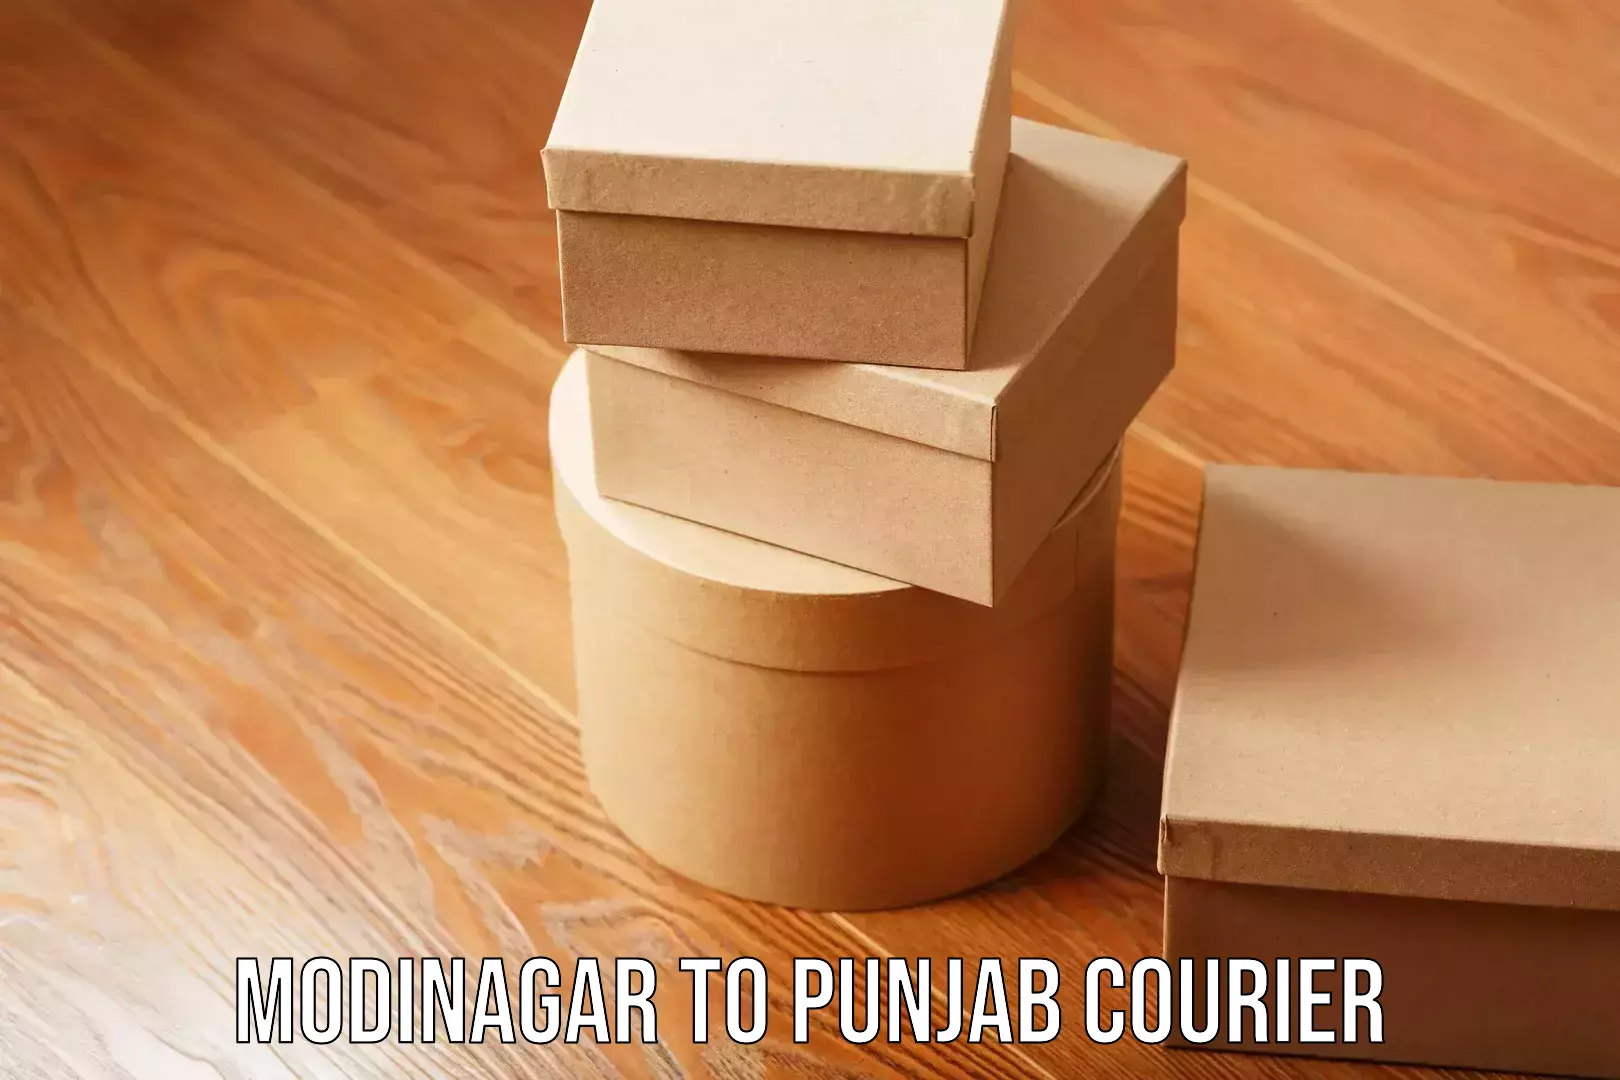 Home moving experts Modinagar to Punjab